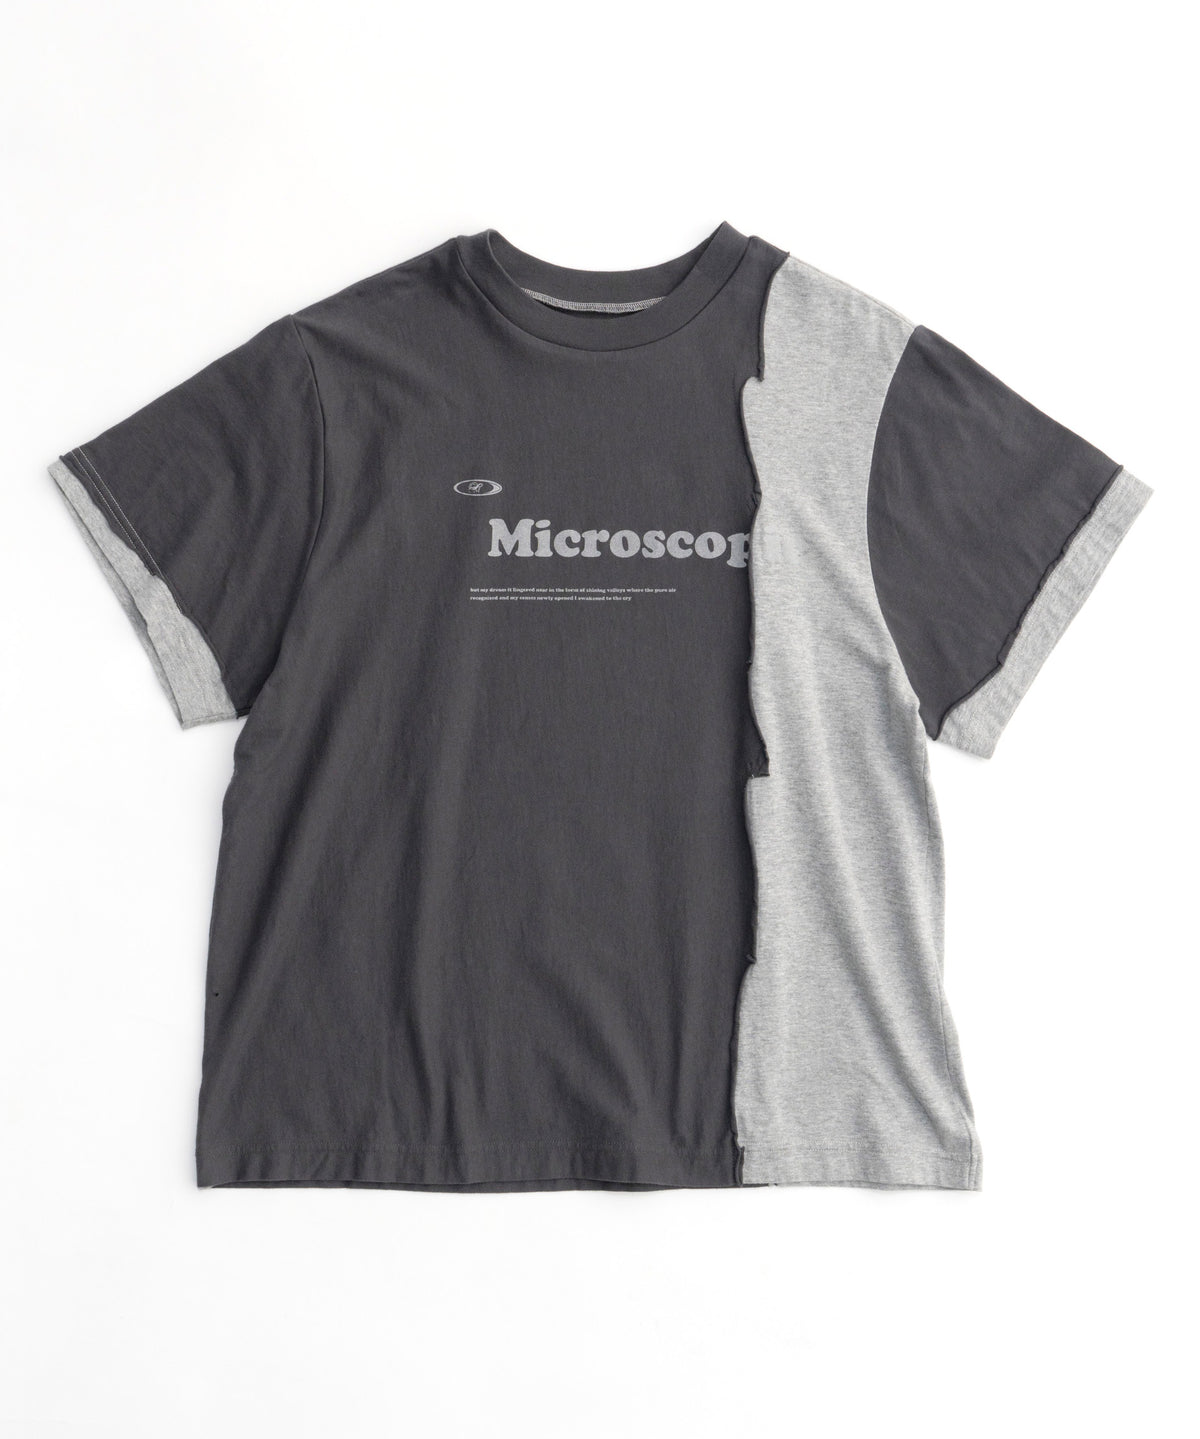 Microscopic T-shirt